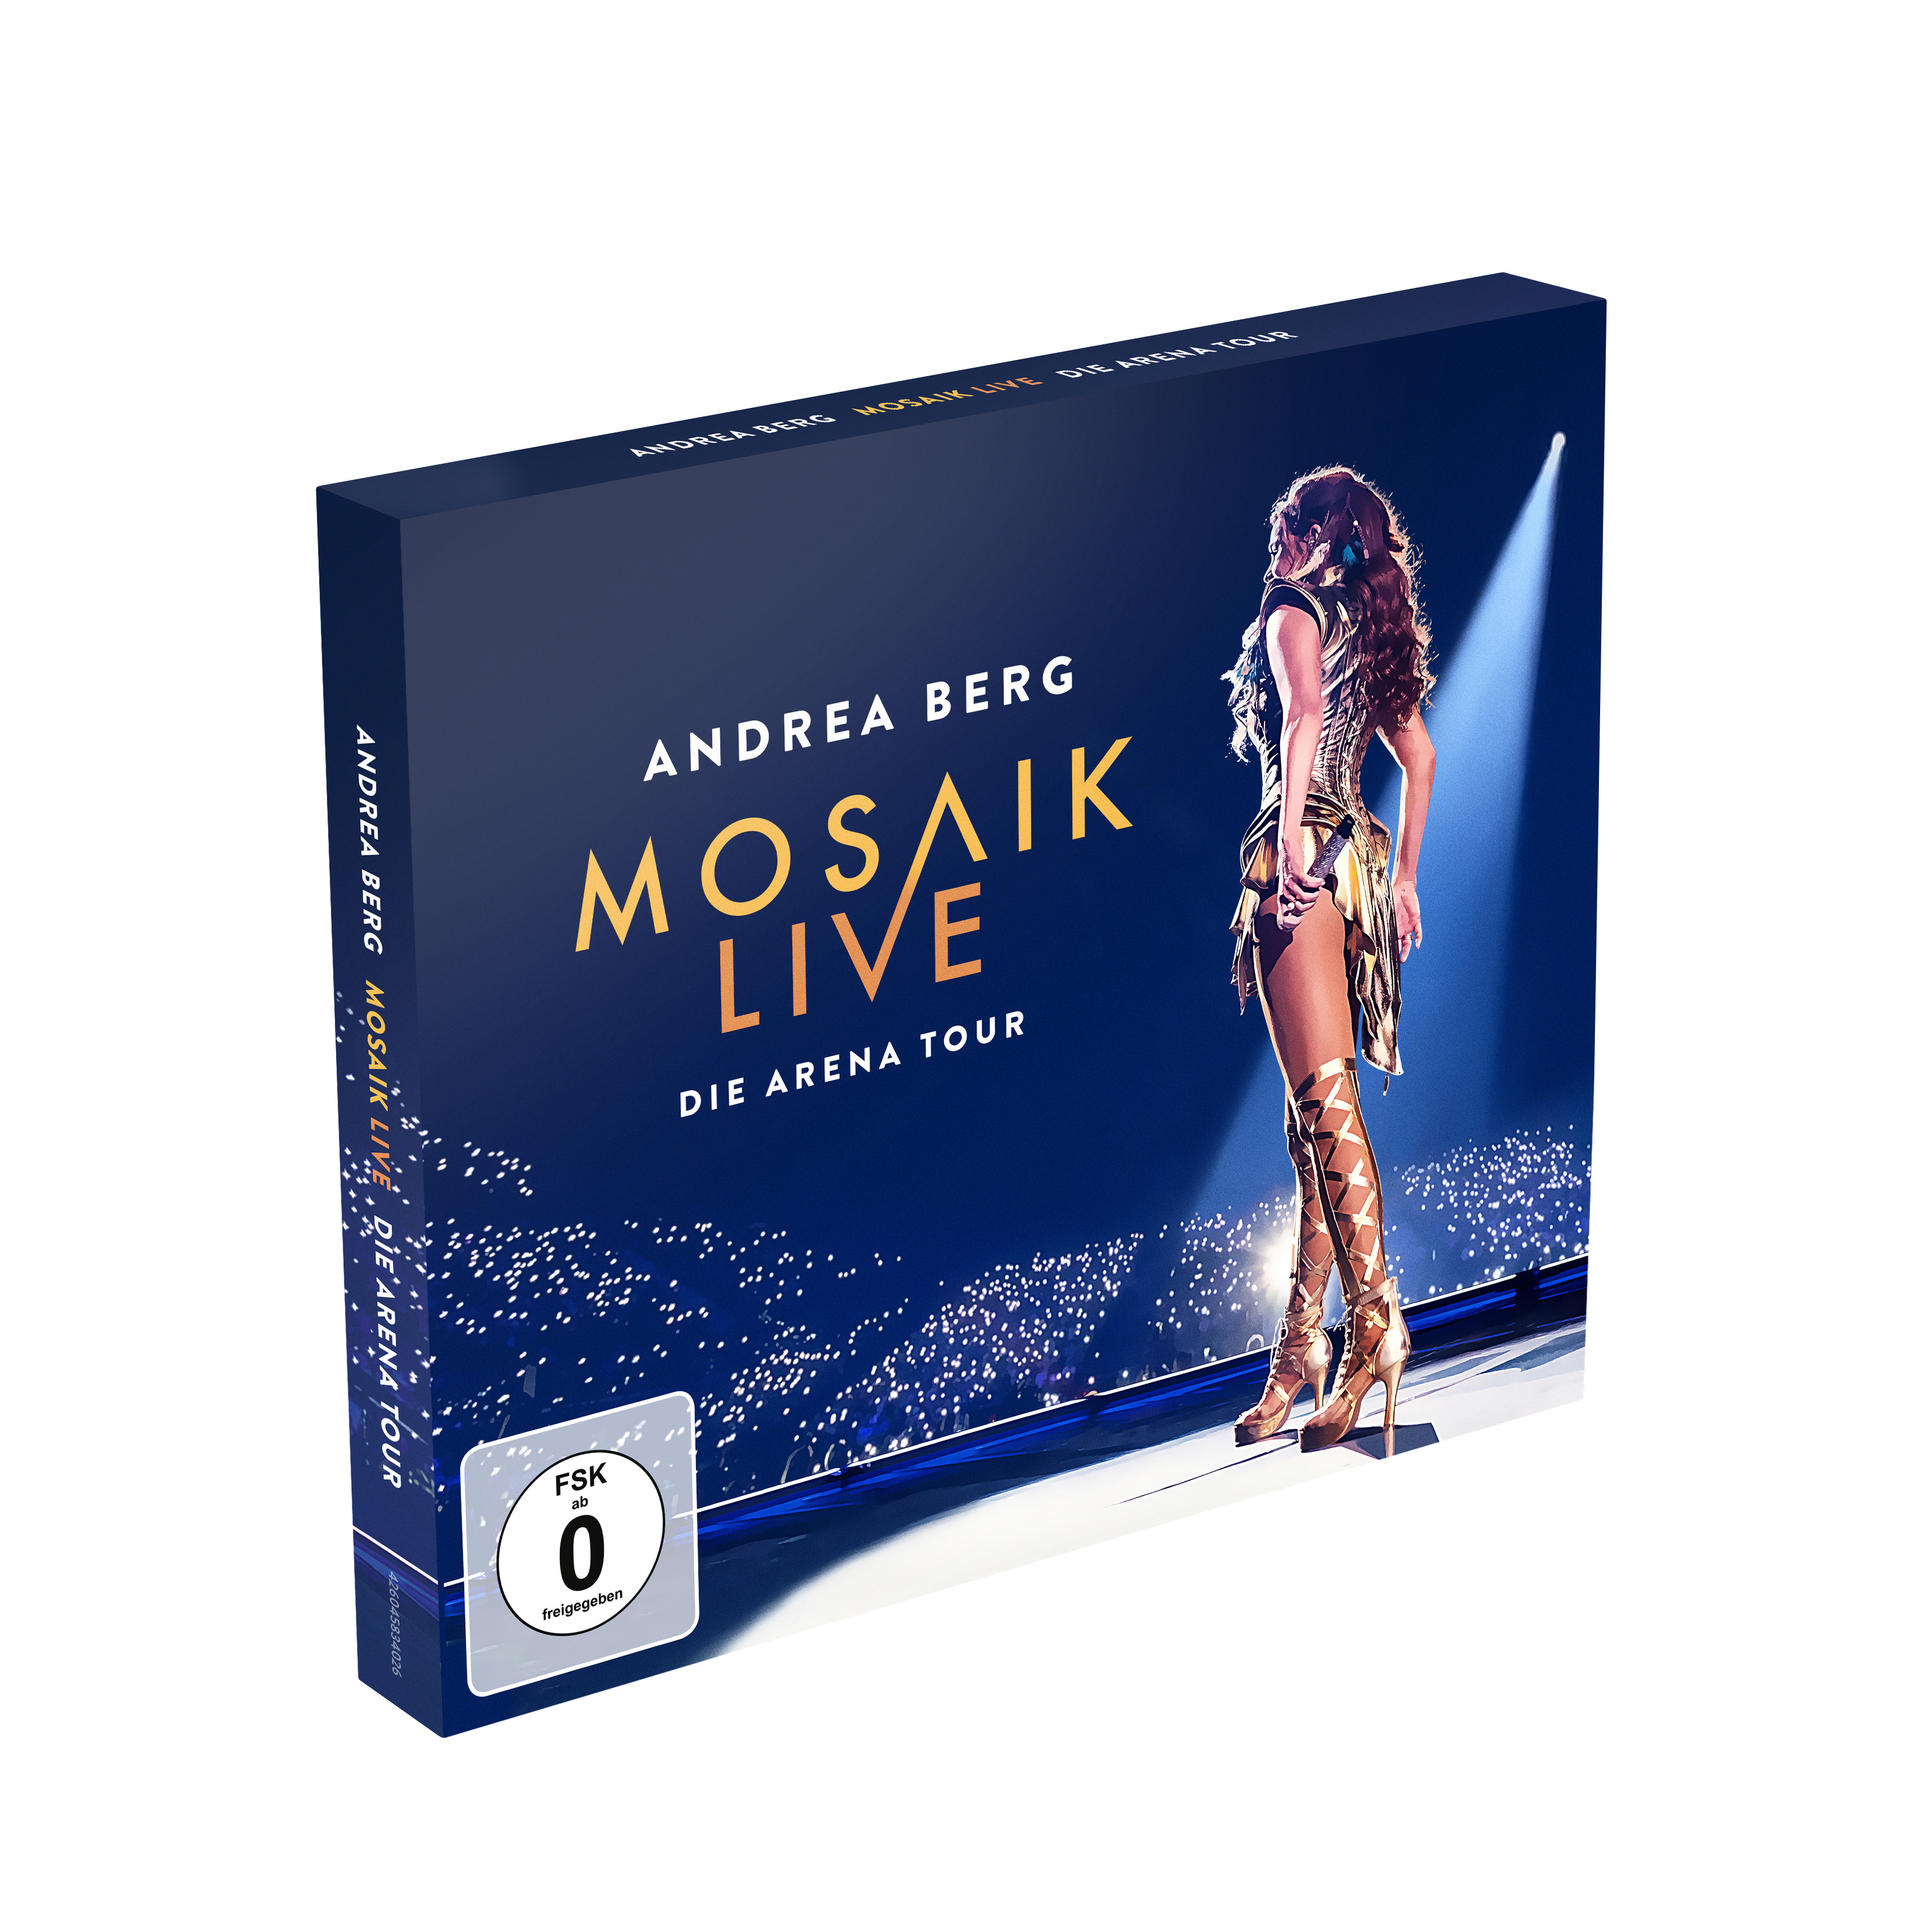 - + (CD Andrea - Video) Tour Arena Berg Mosaik DVD Live-Die